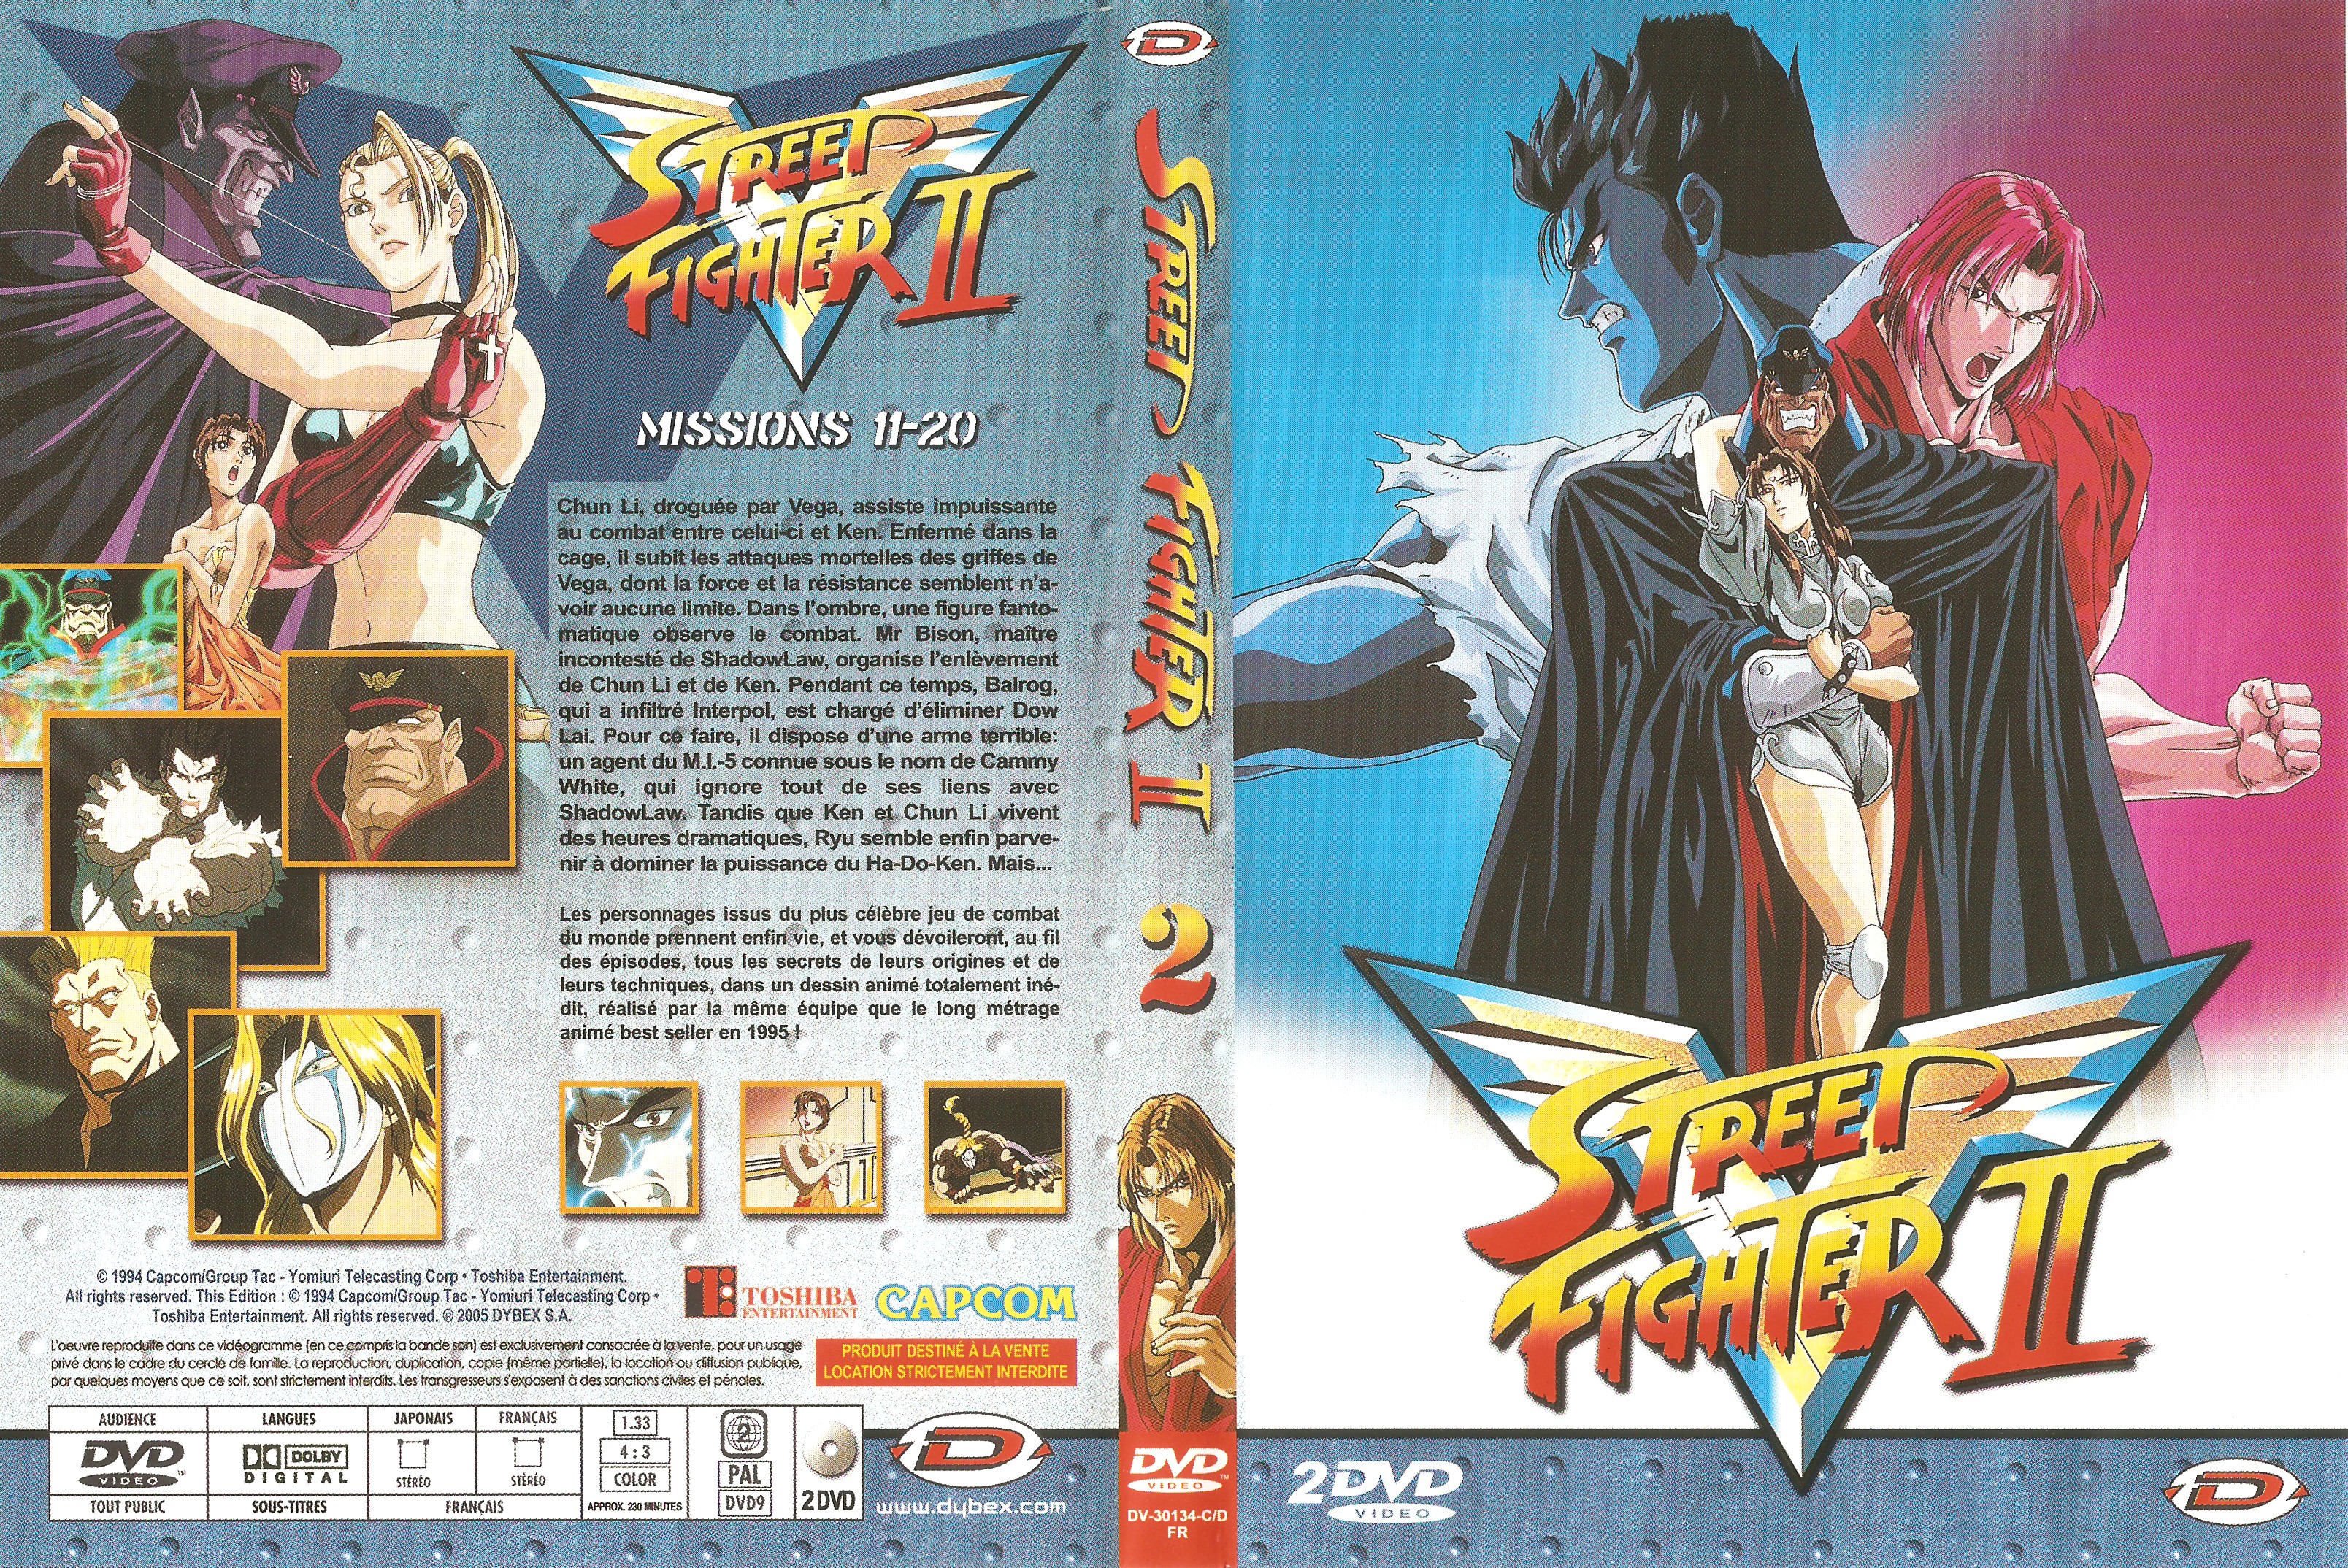 Jaquette DVD Street fighter 2 vol 2